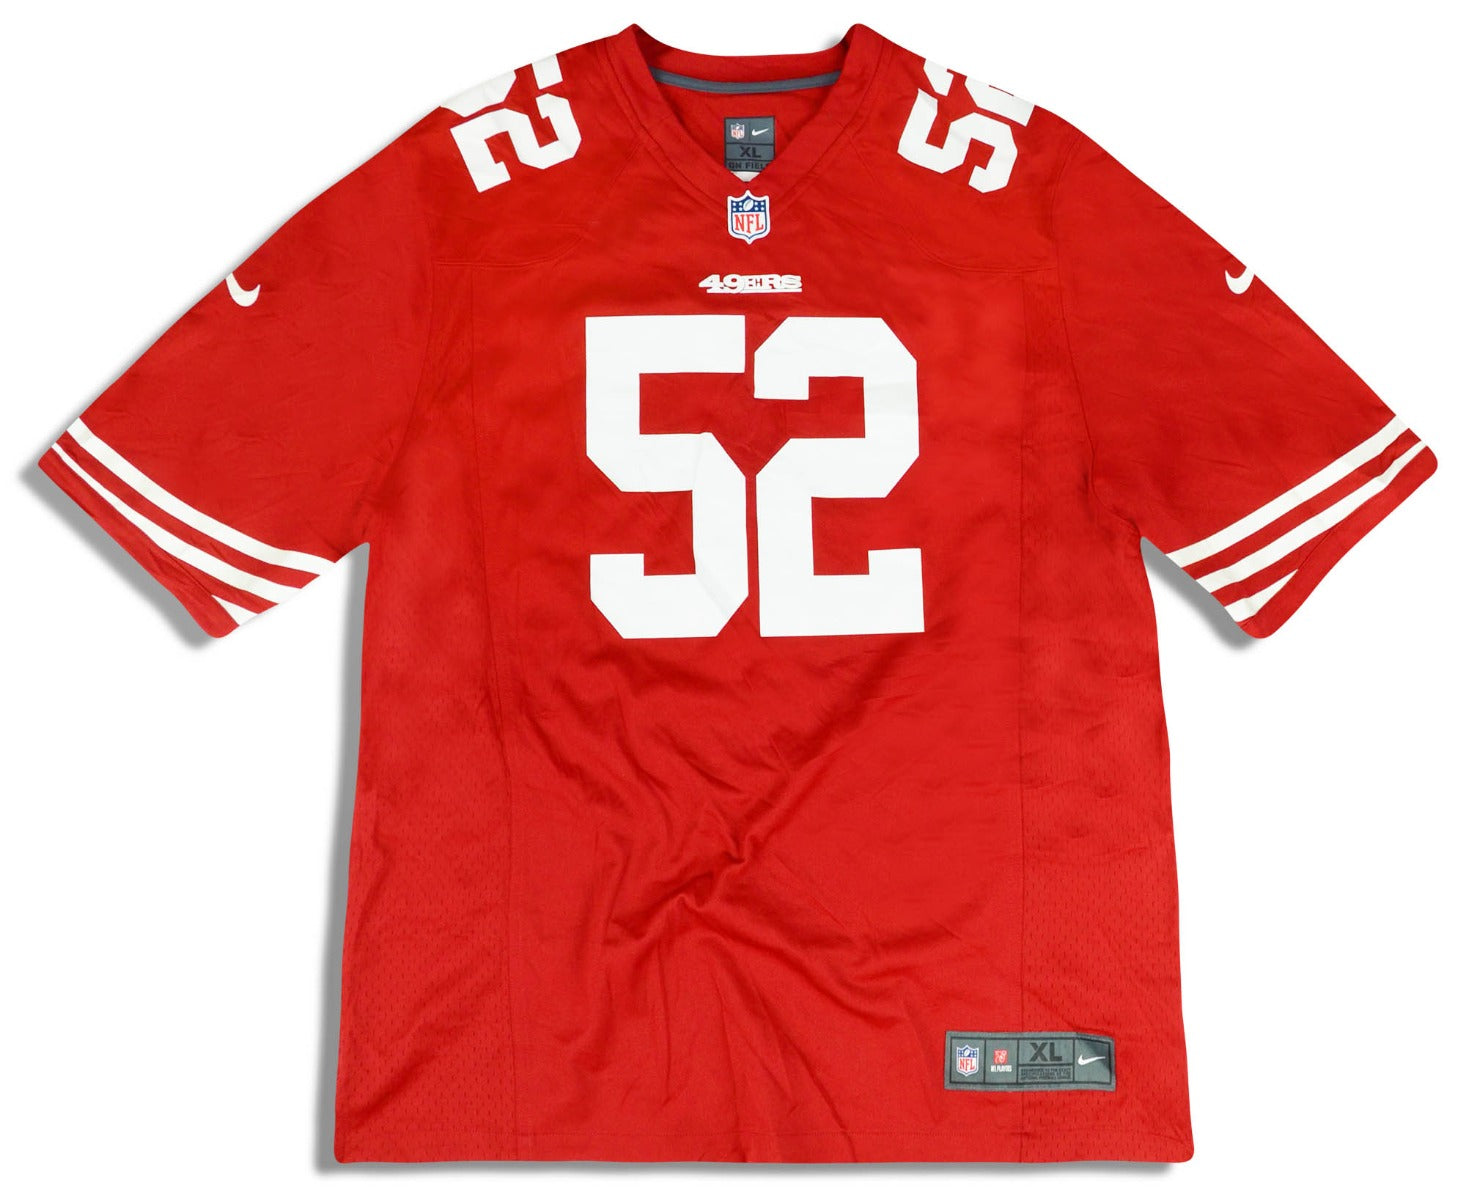 49ers jersey 52 willis